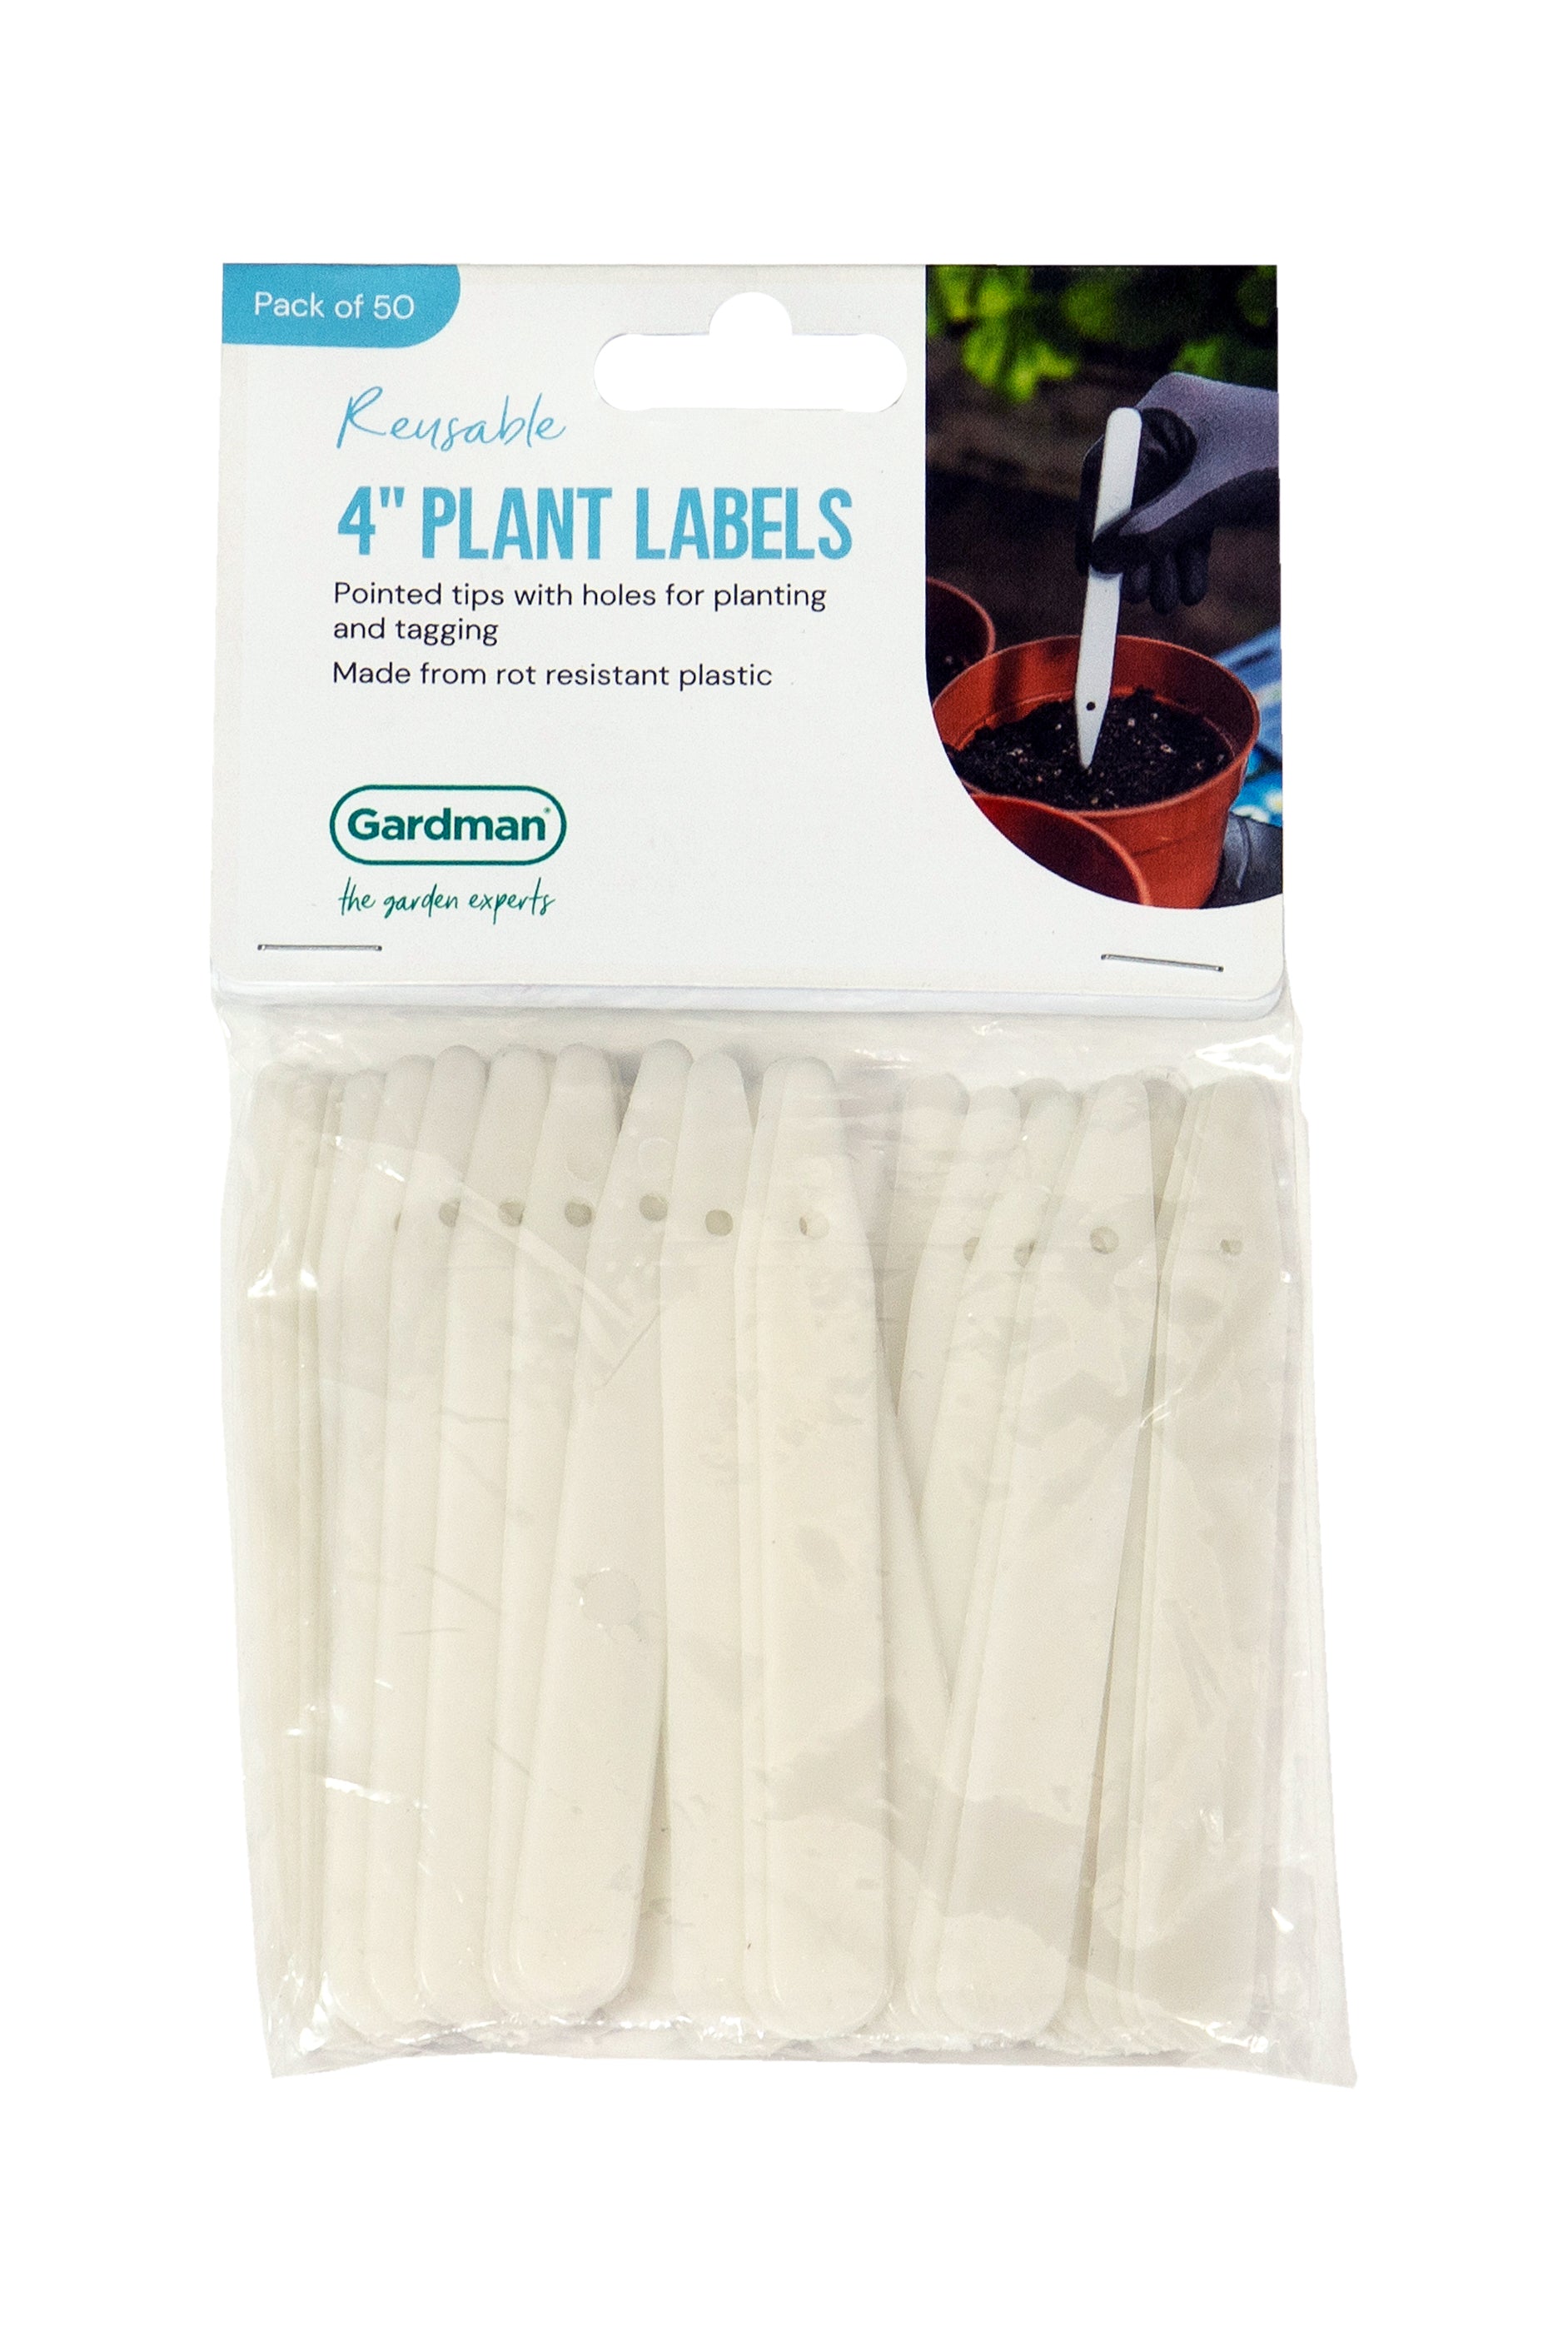 Gardman 4" Plant Labels - 50 Pack